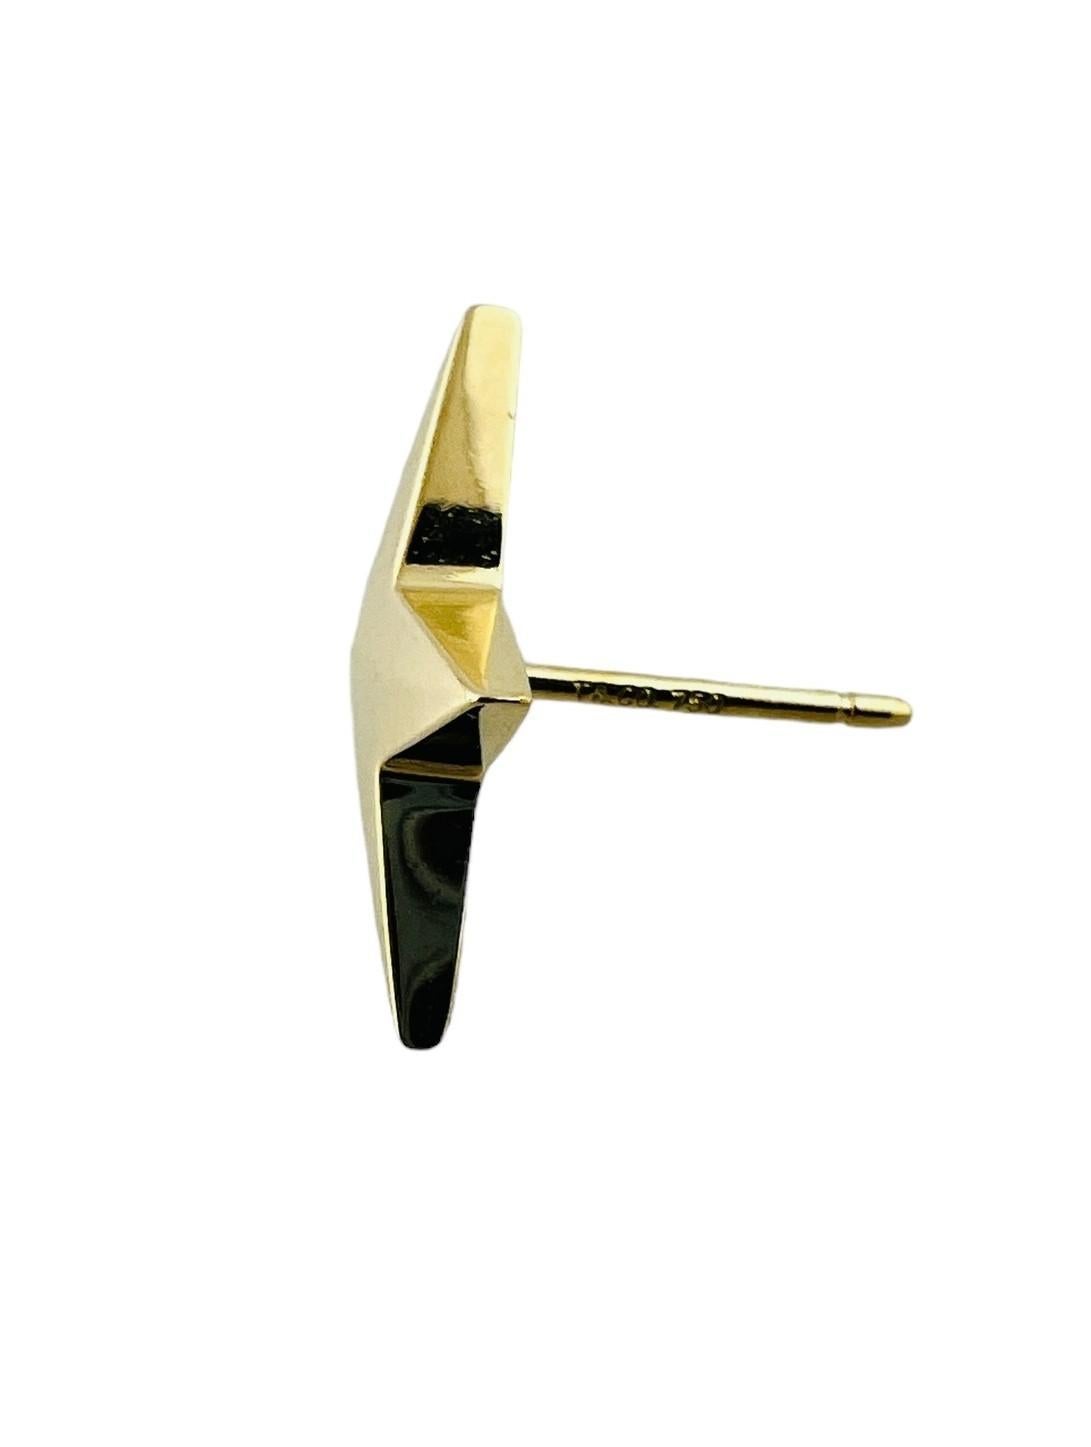 Tiffany & Co. 18K Yellow Gold Star Earrings #16677 For Sale 2